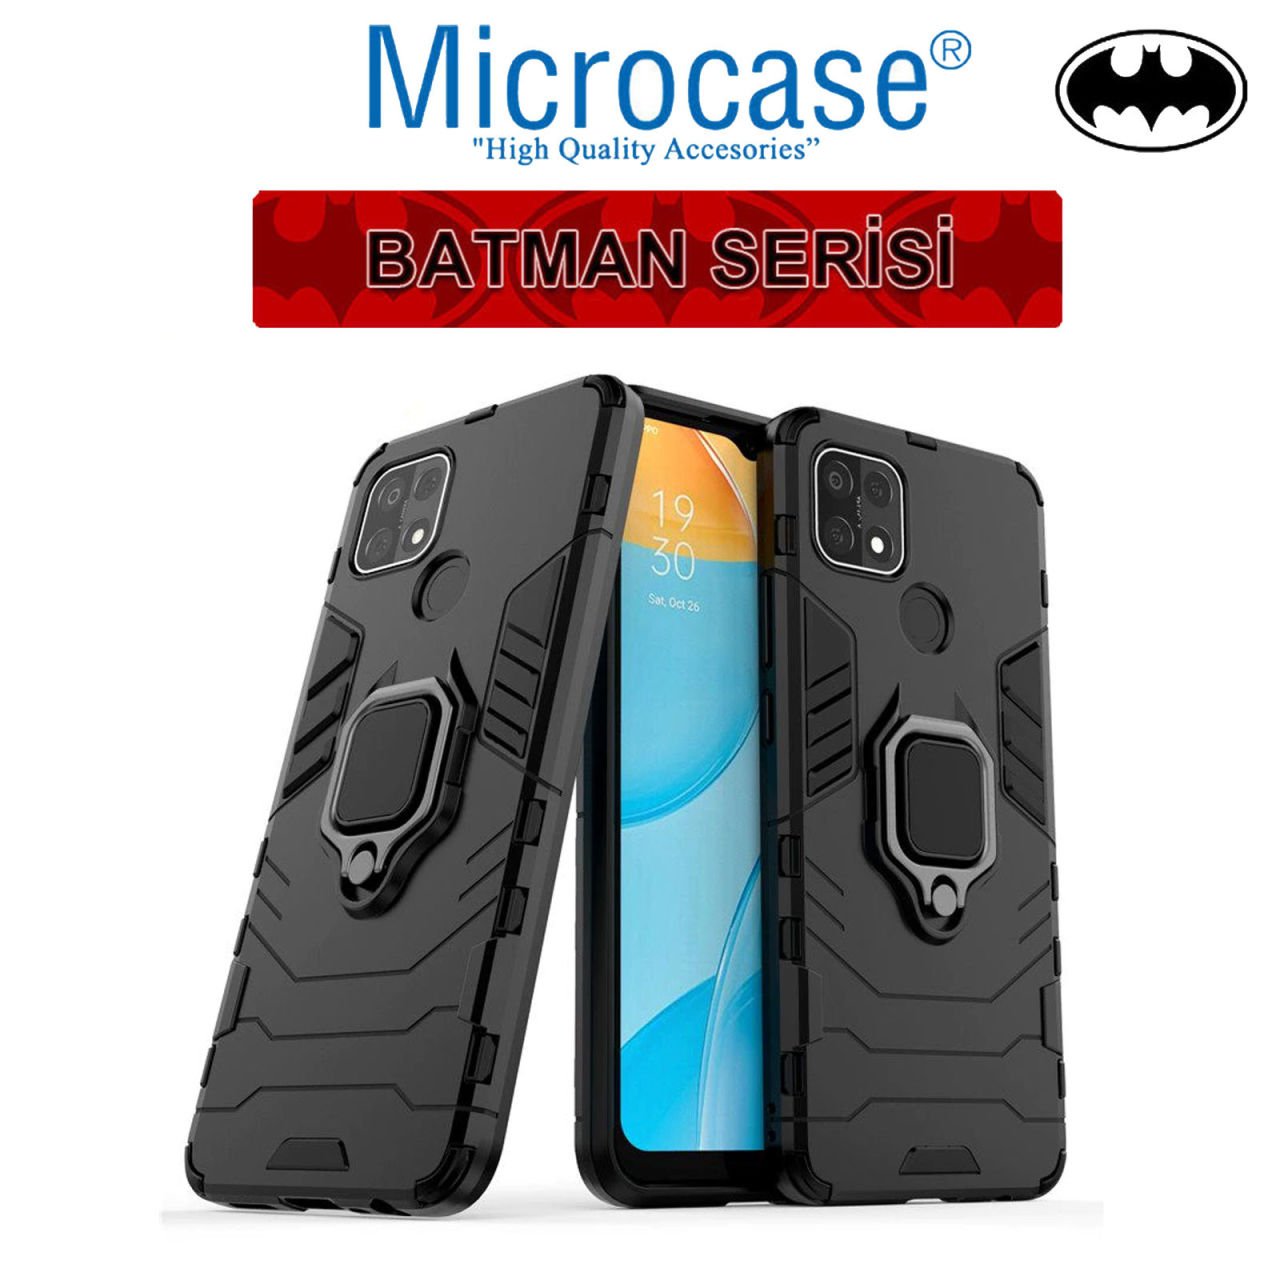 Microcase Oppo A15S Batman Serisi Yüzük Standlı Armor Kılıf - Siyah